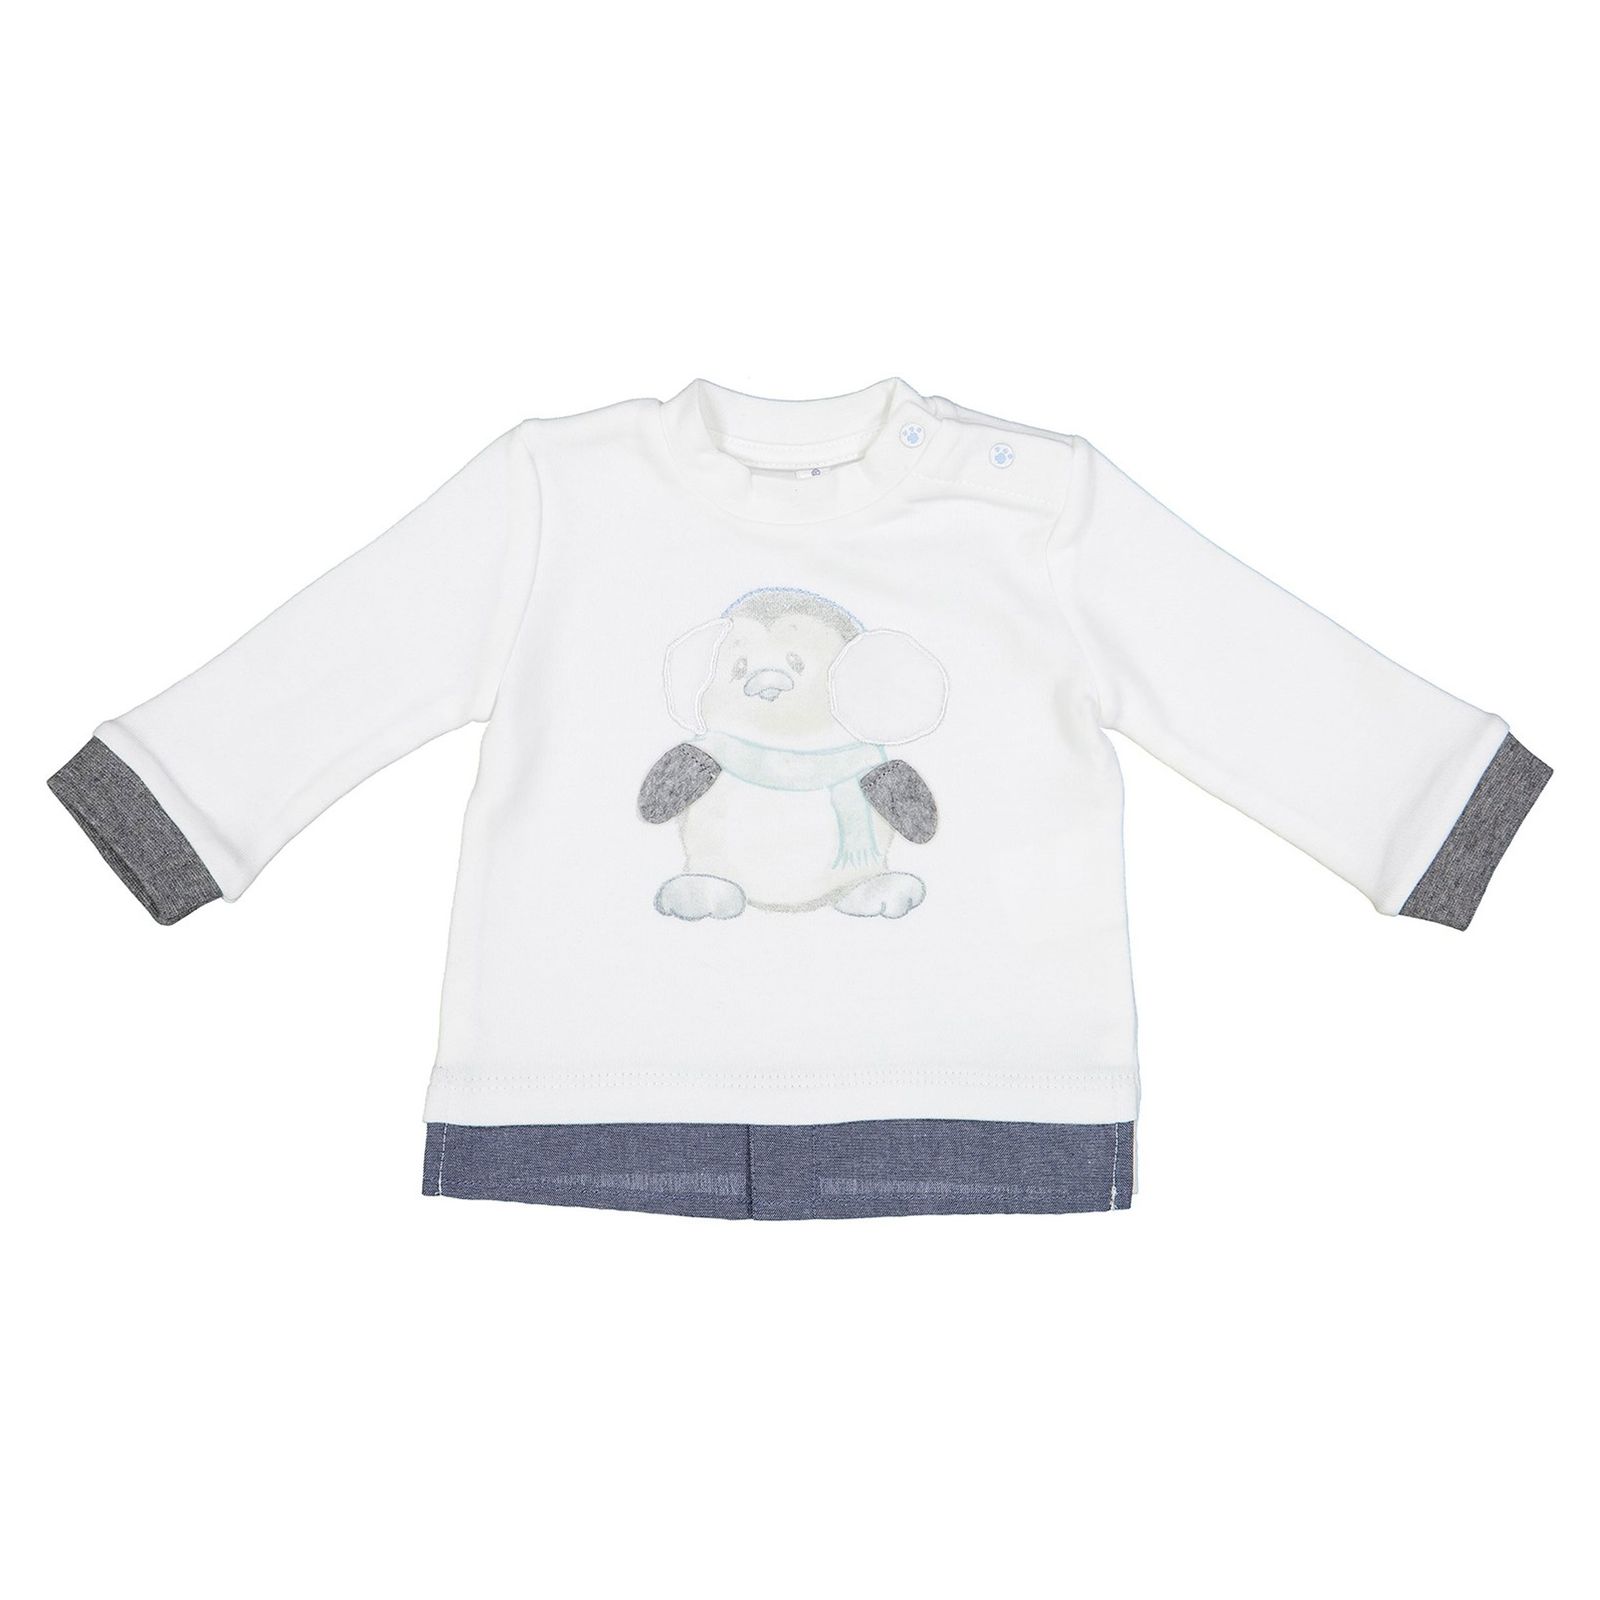 تی شرت نخی نوزادی پسرانه - ایدکس - سفید - 1